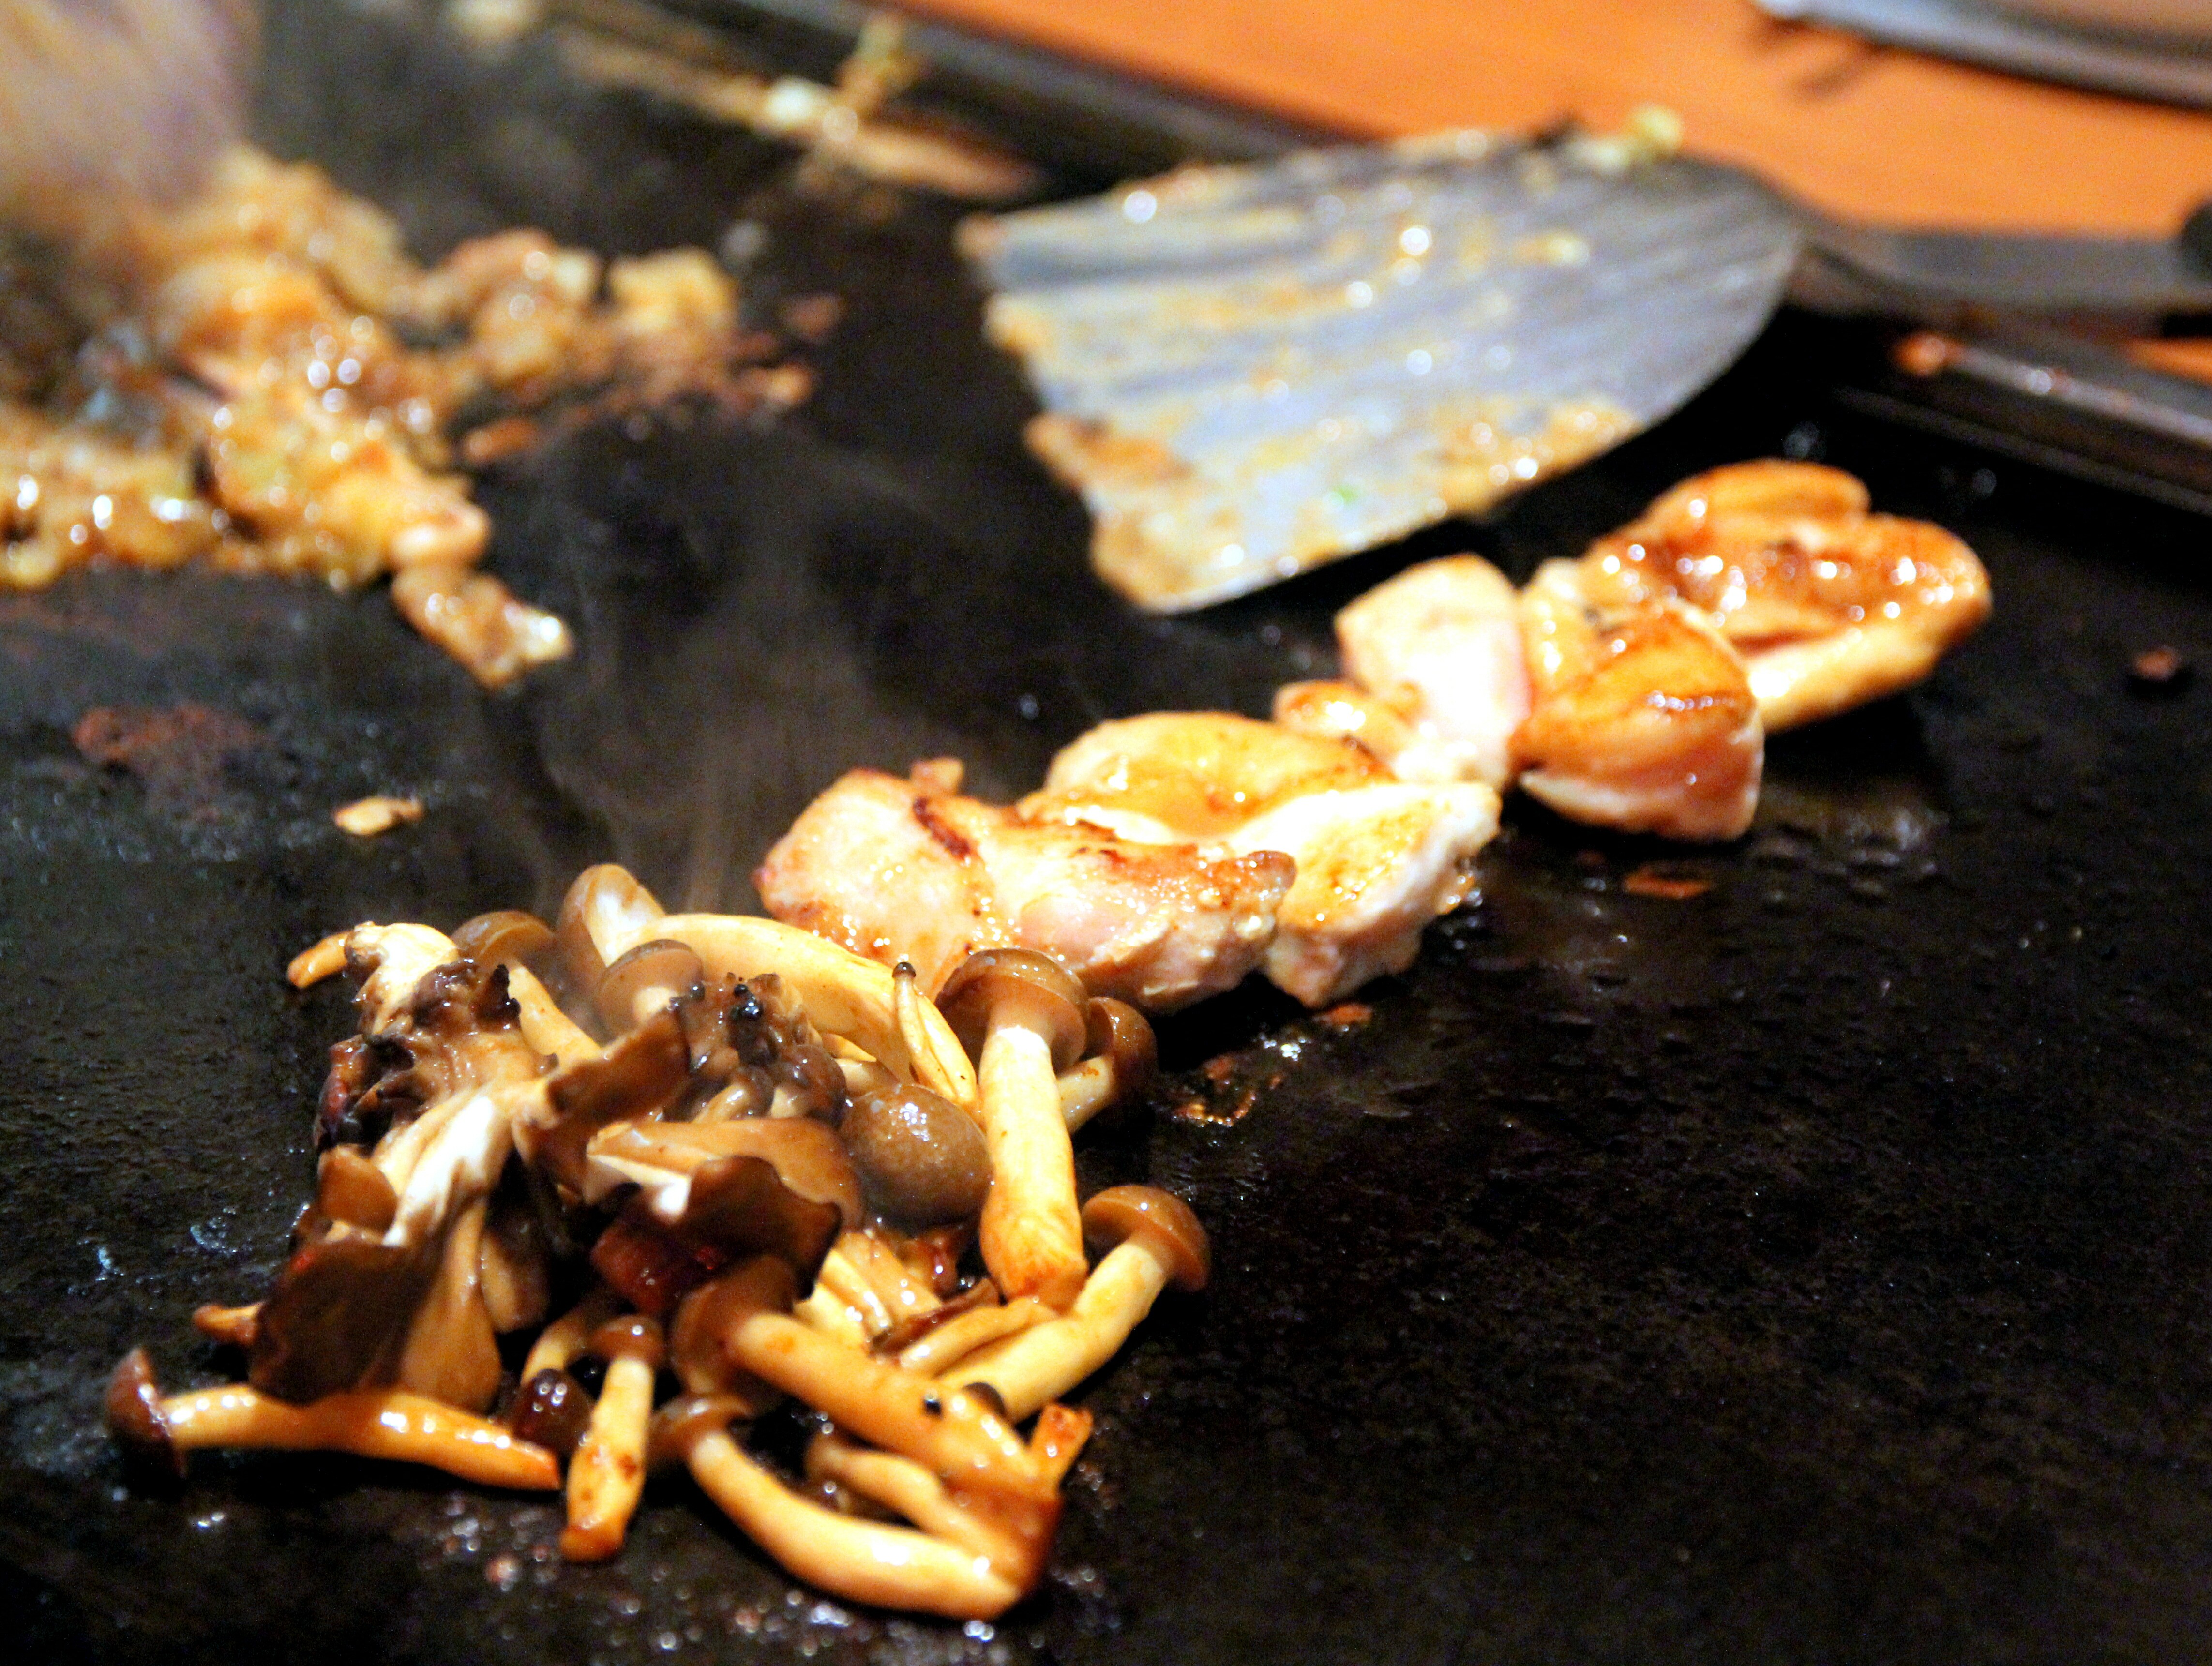 fugetsu-sapporo-17-chicken-steak-and-mushrooms-teppanyaki